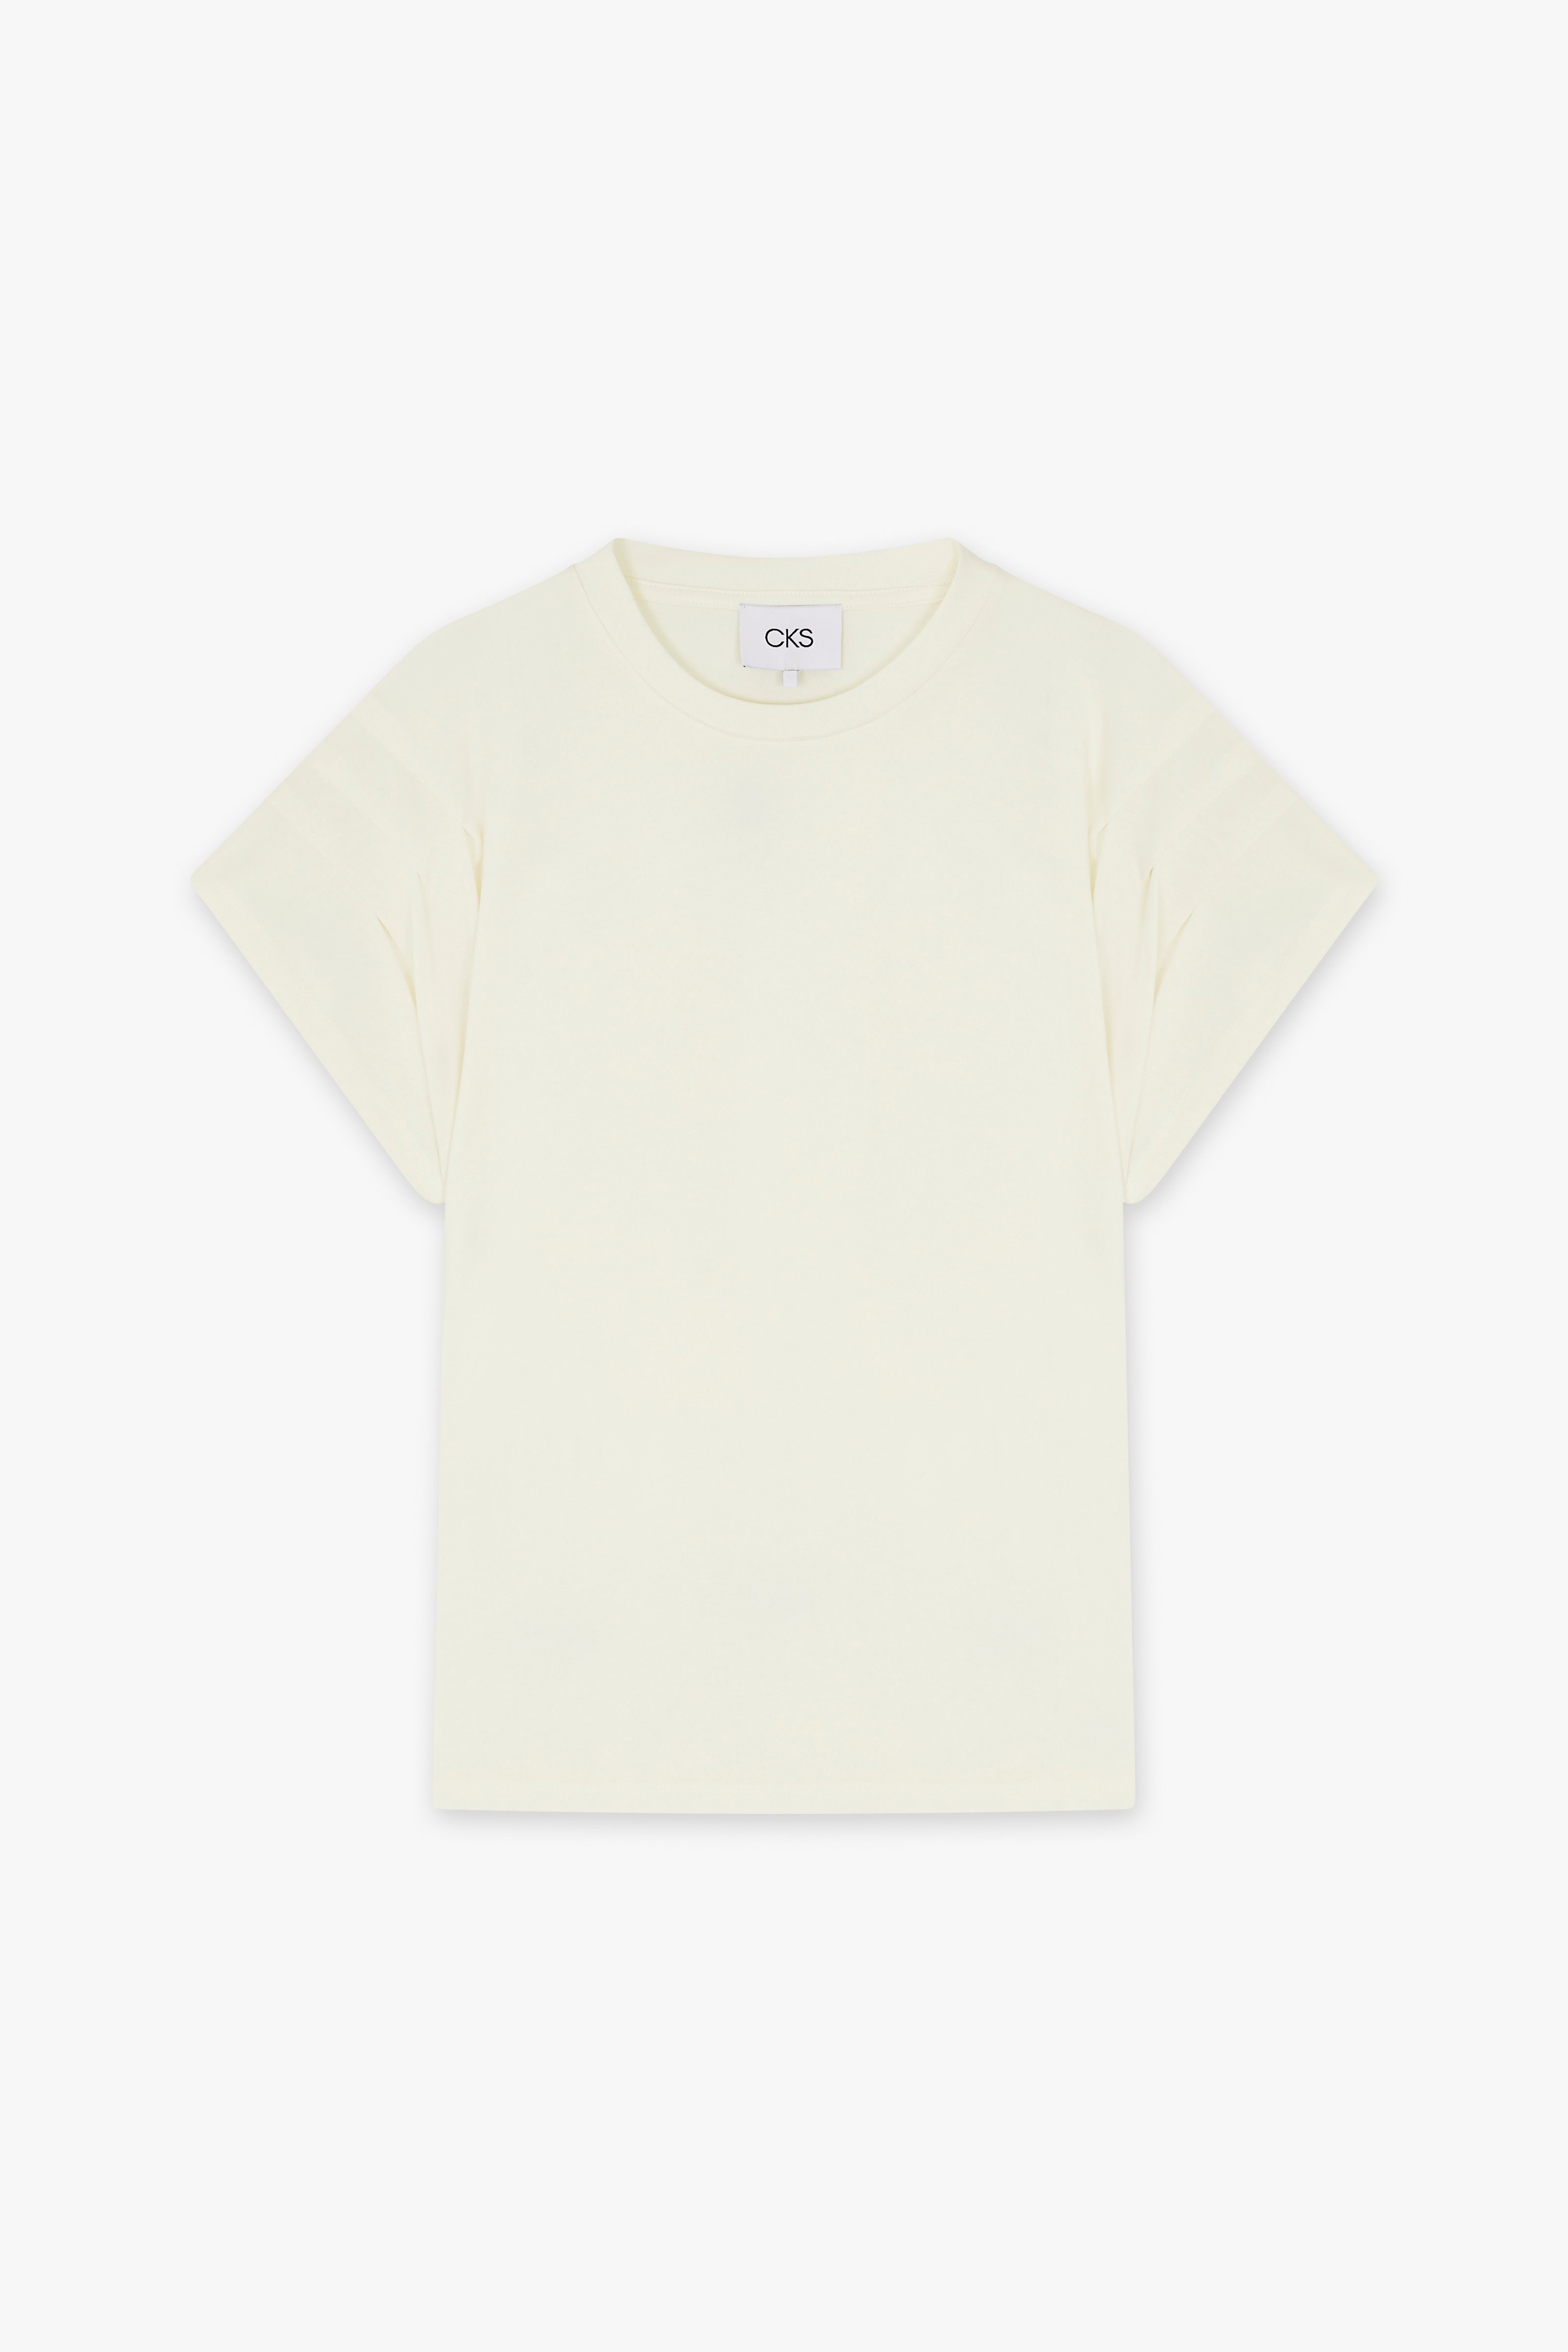 CKS Dames - JAZZ - T-Shirt Kurzarm - Weiß